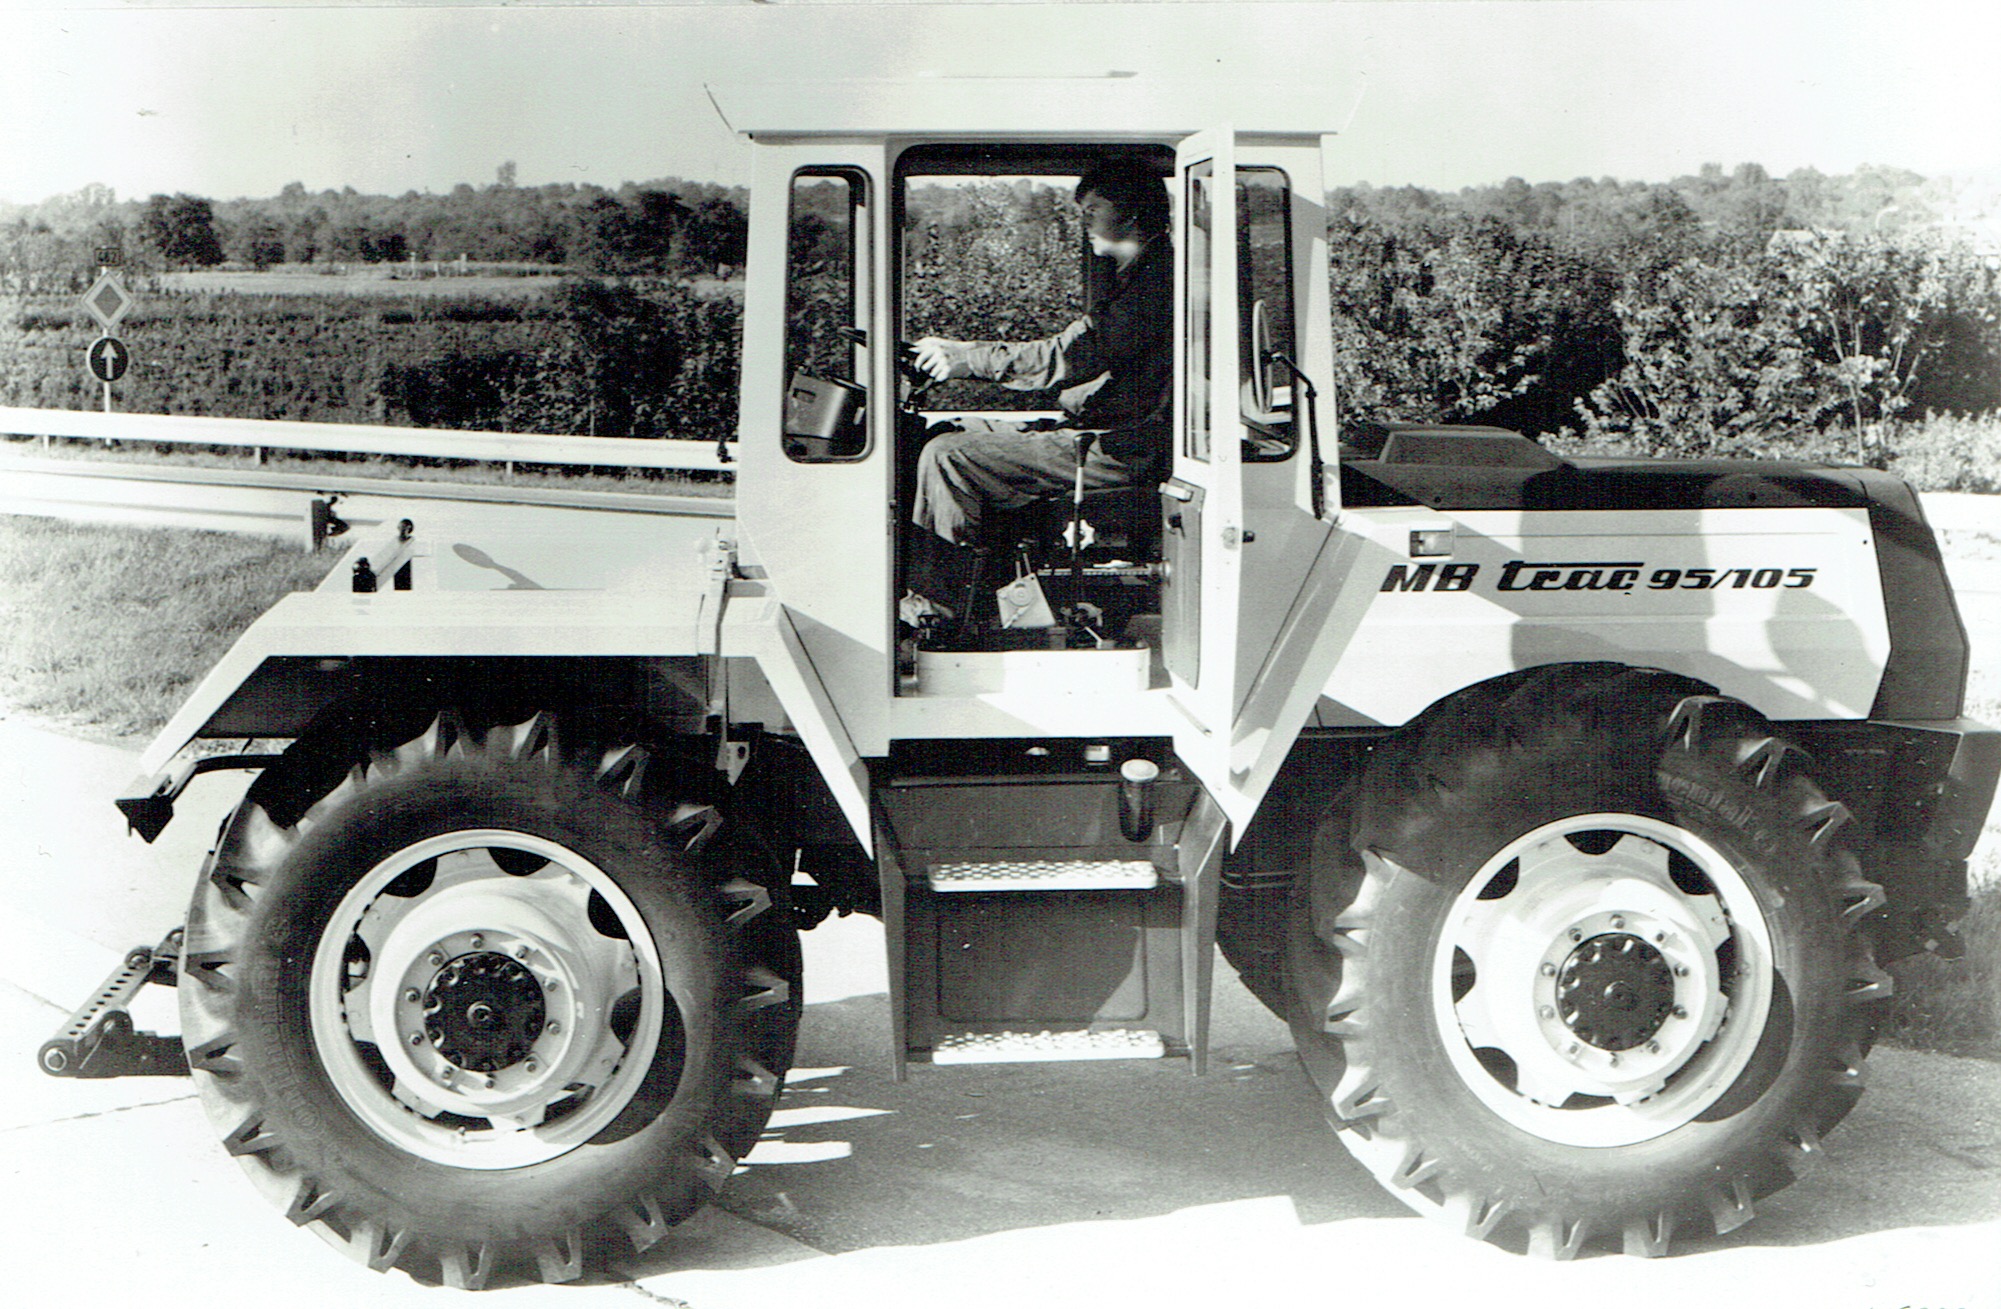 Unimog Community on X: 1974: Prototyp eines MB-trac 95/105 mit Drehsitz.  Prototype of a MB-trac 95/105 with swivel seat. #unimog #agrar #mbtrac  #agriculture #forestry #mbtracpower #prototype #conceptcar #systemschlepper  #mbtrac1000 #mercedesbenztrac